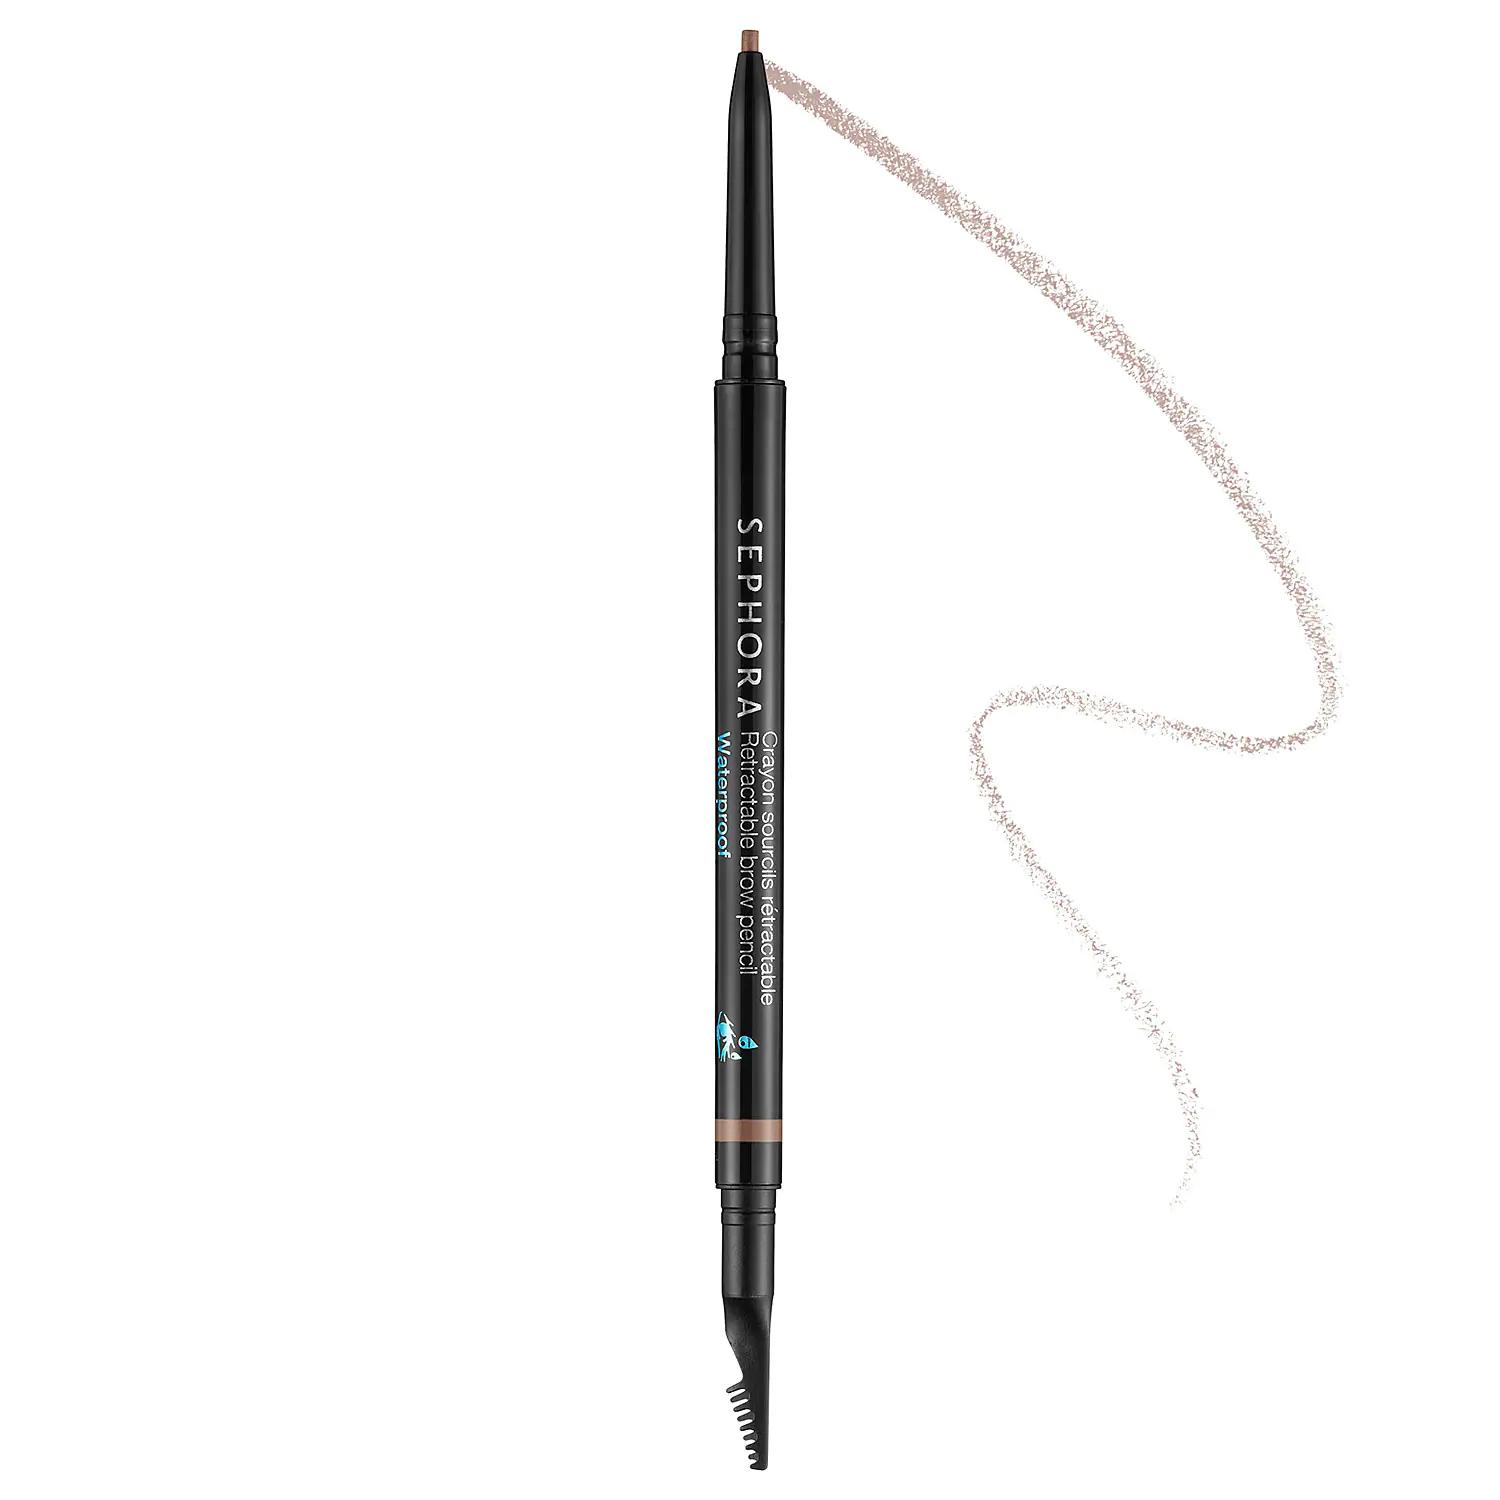 Sephora Retractable Brow Pencil Waterproof Auburn